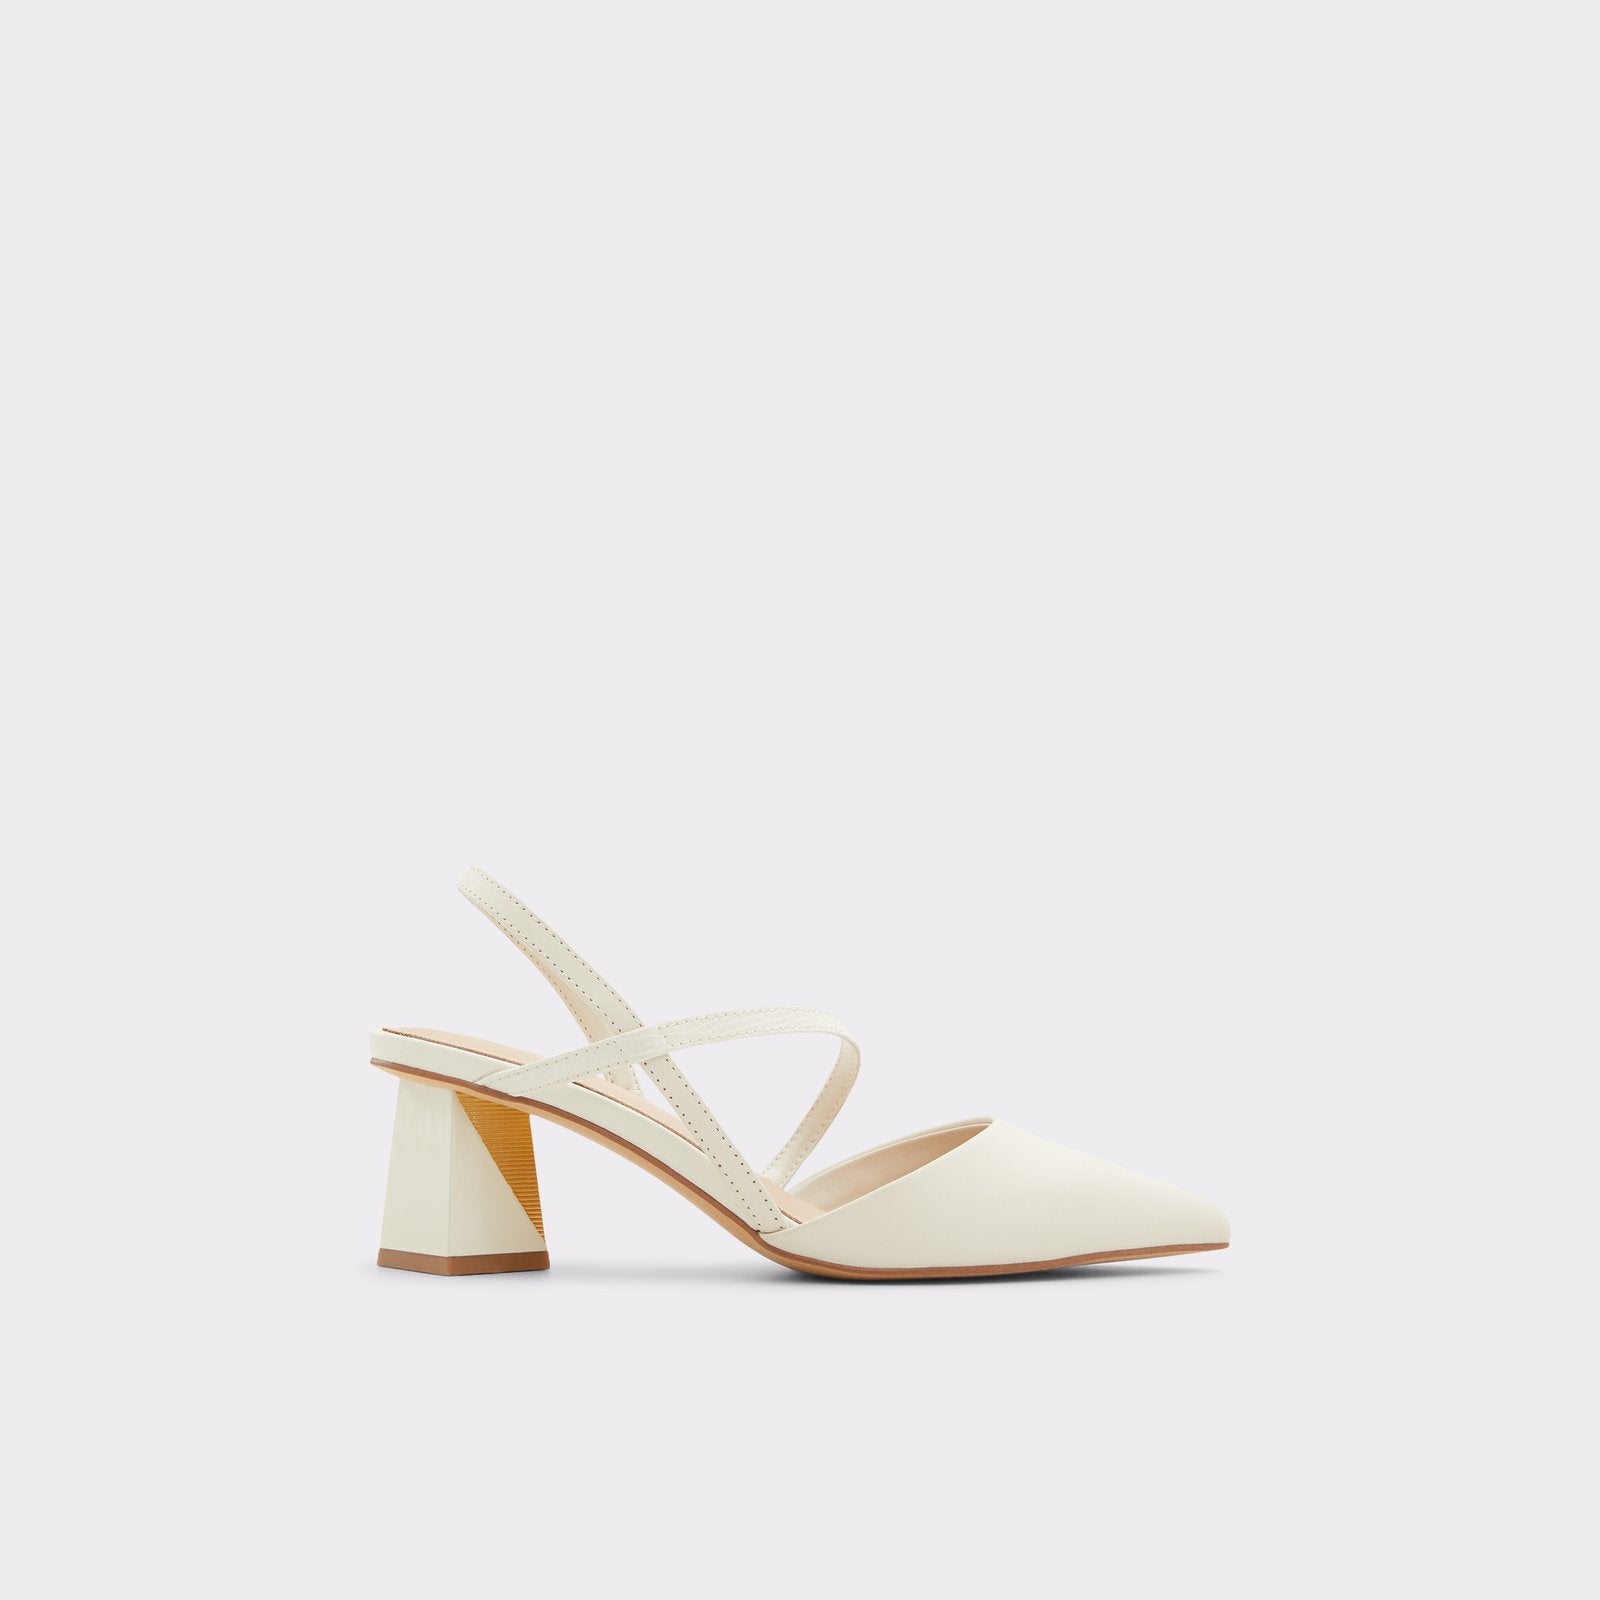 Suzette Women Shoes - White - ALDO KSA